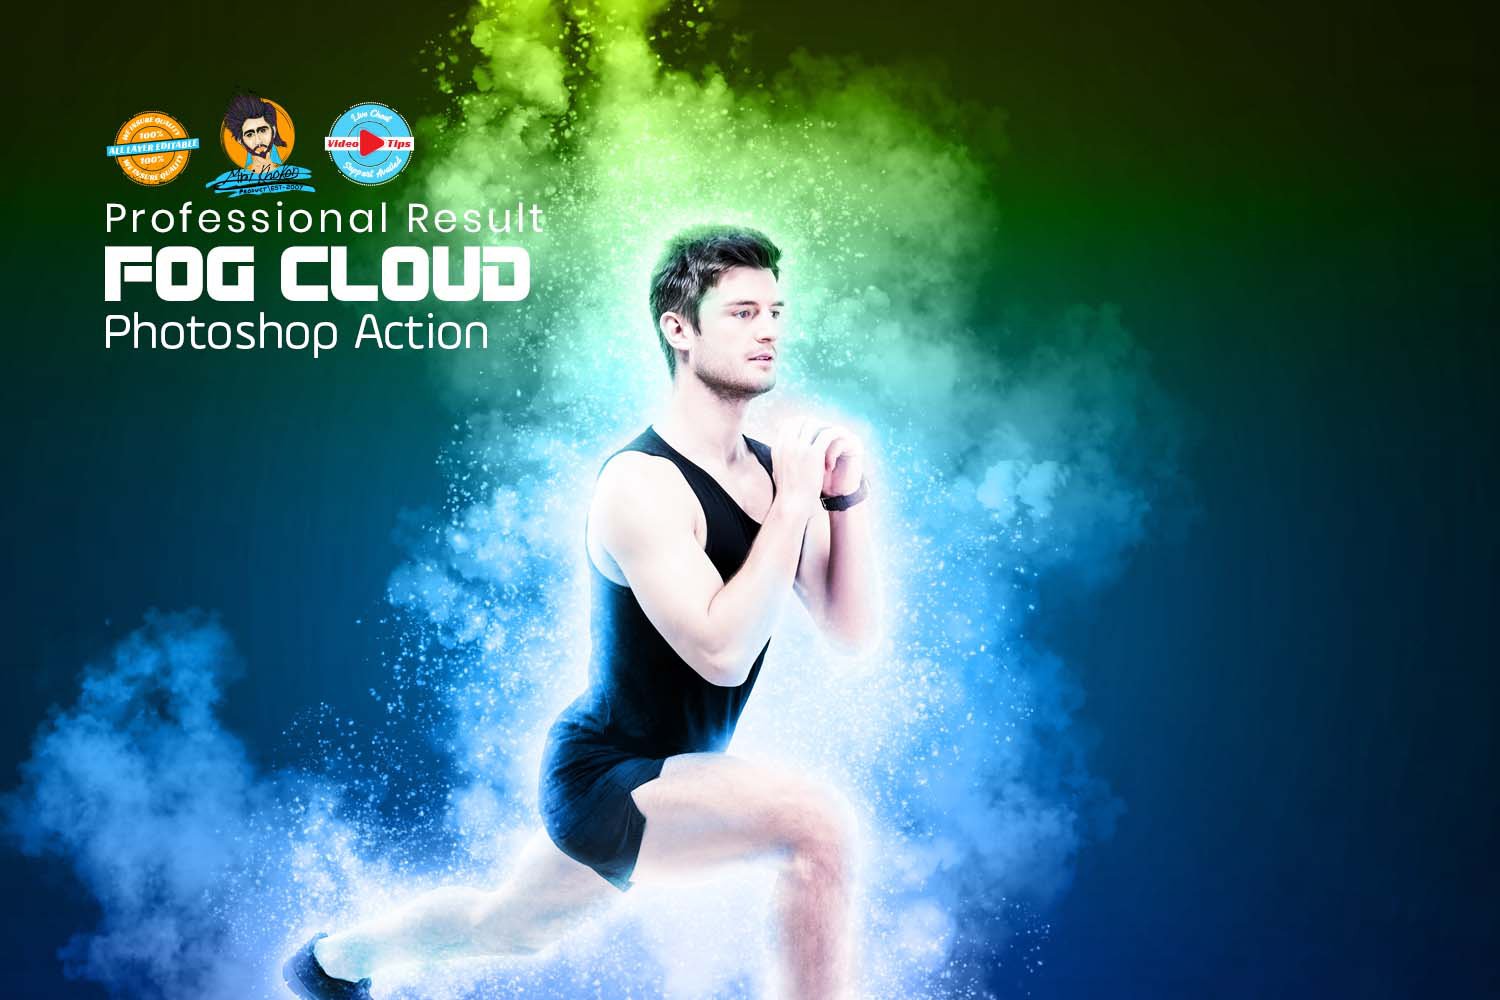 Fog Cloud Photoshop Actioncover image.